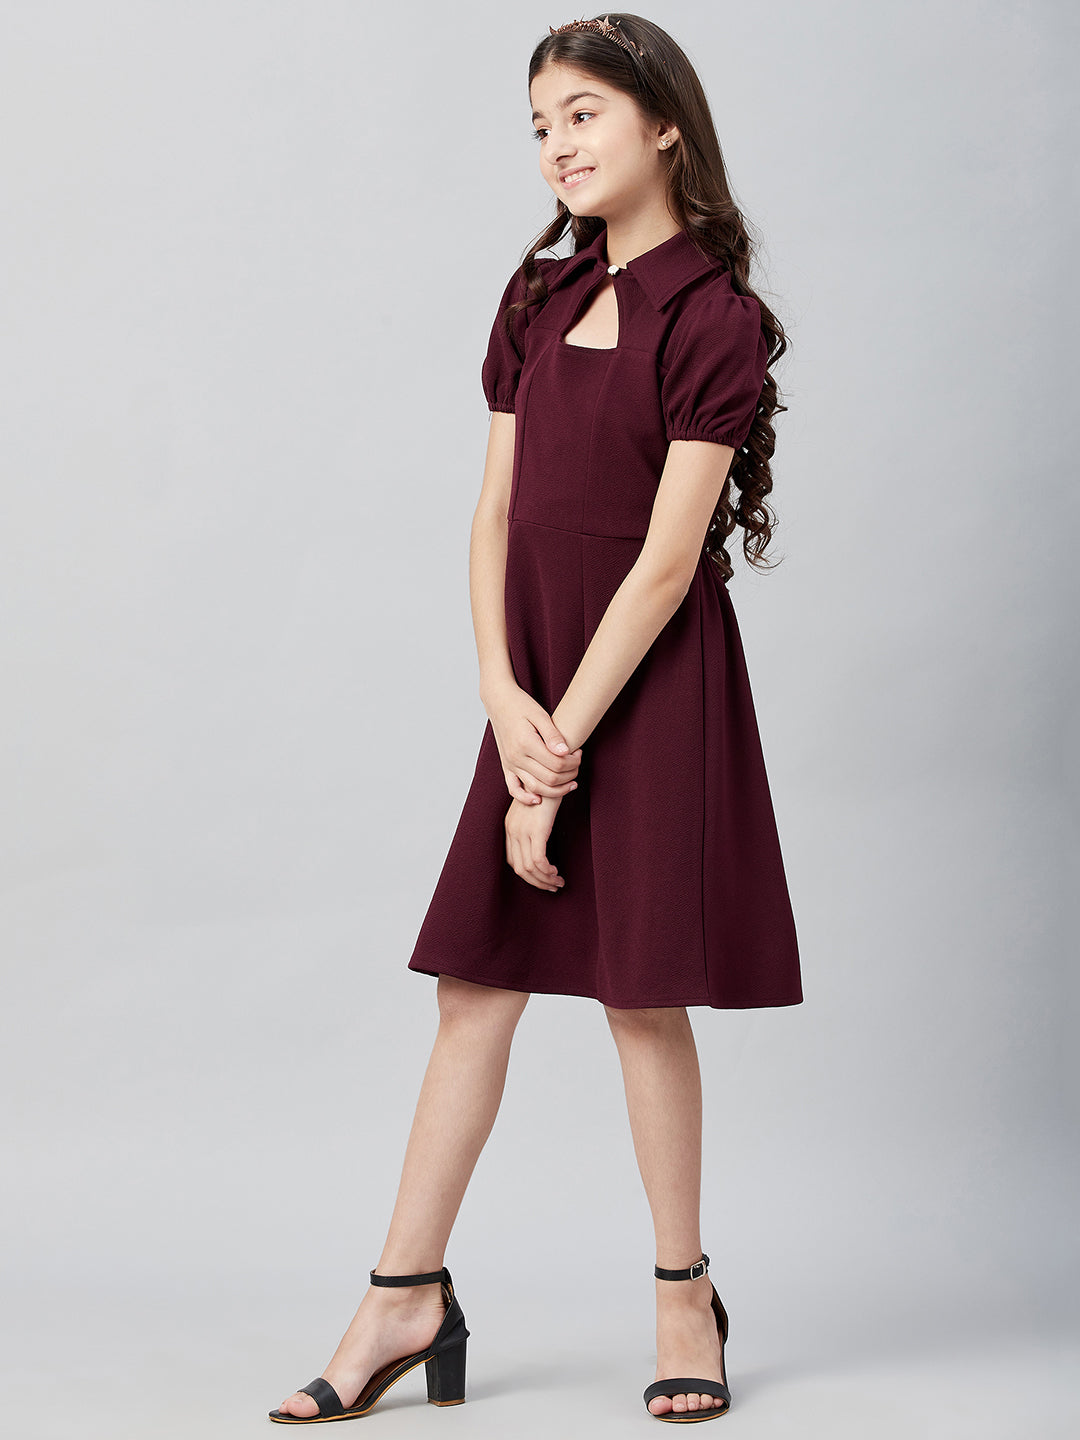 Athena Girl Burgundy Dress - Athena Lifestyle